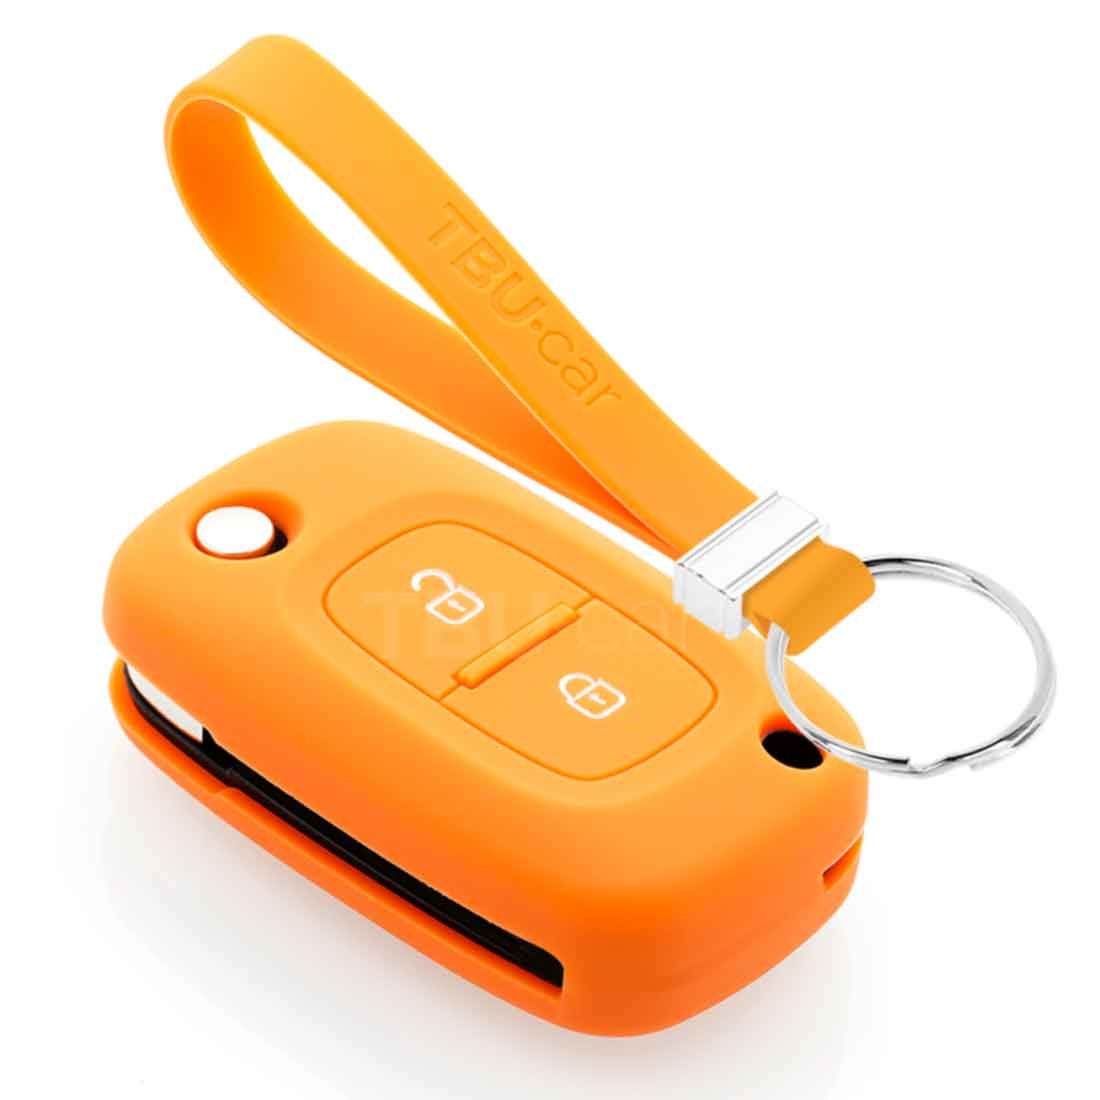 TBU car TBU car Autoschlüssel Hülle kompatibel mit Mercedes 2 Tasten - Schutzhülle aus Silikon - Auto Schlüsselhülle Cover in Orange